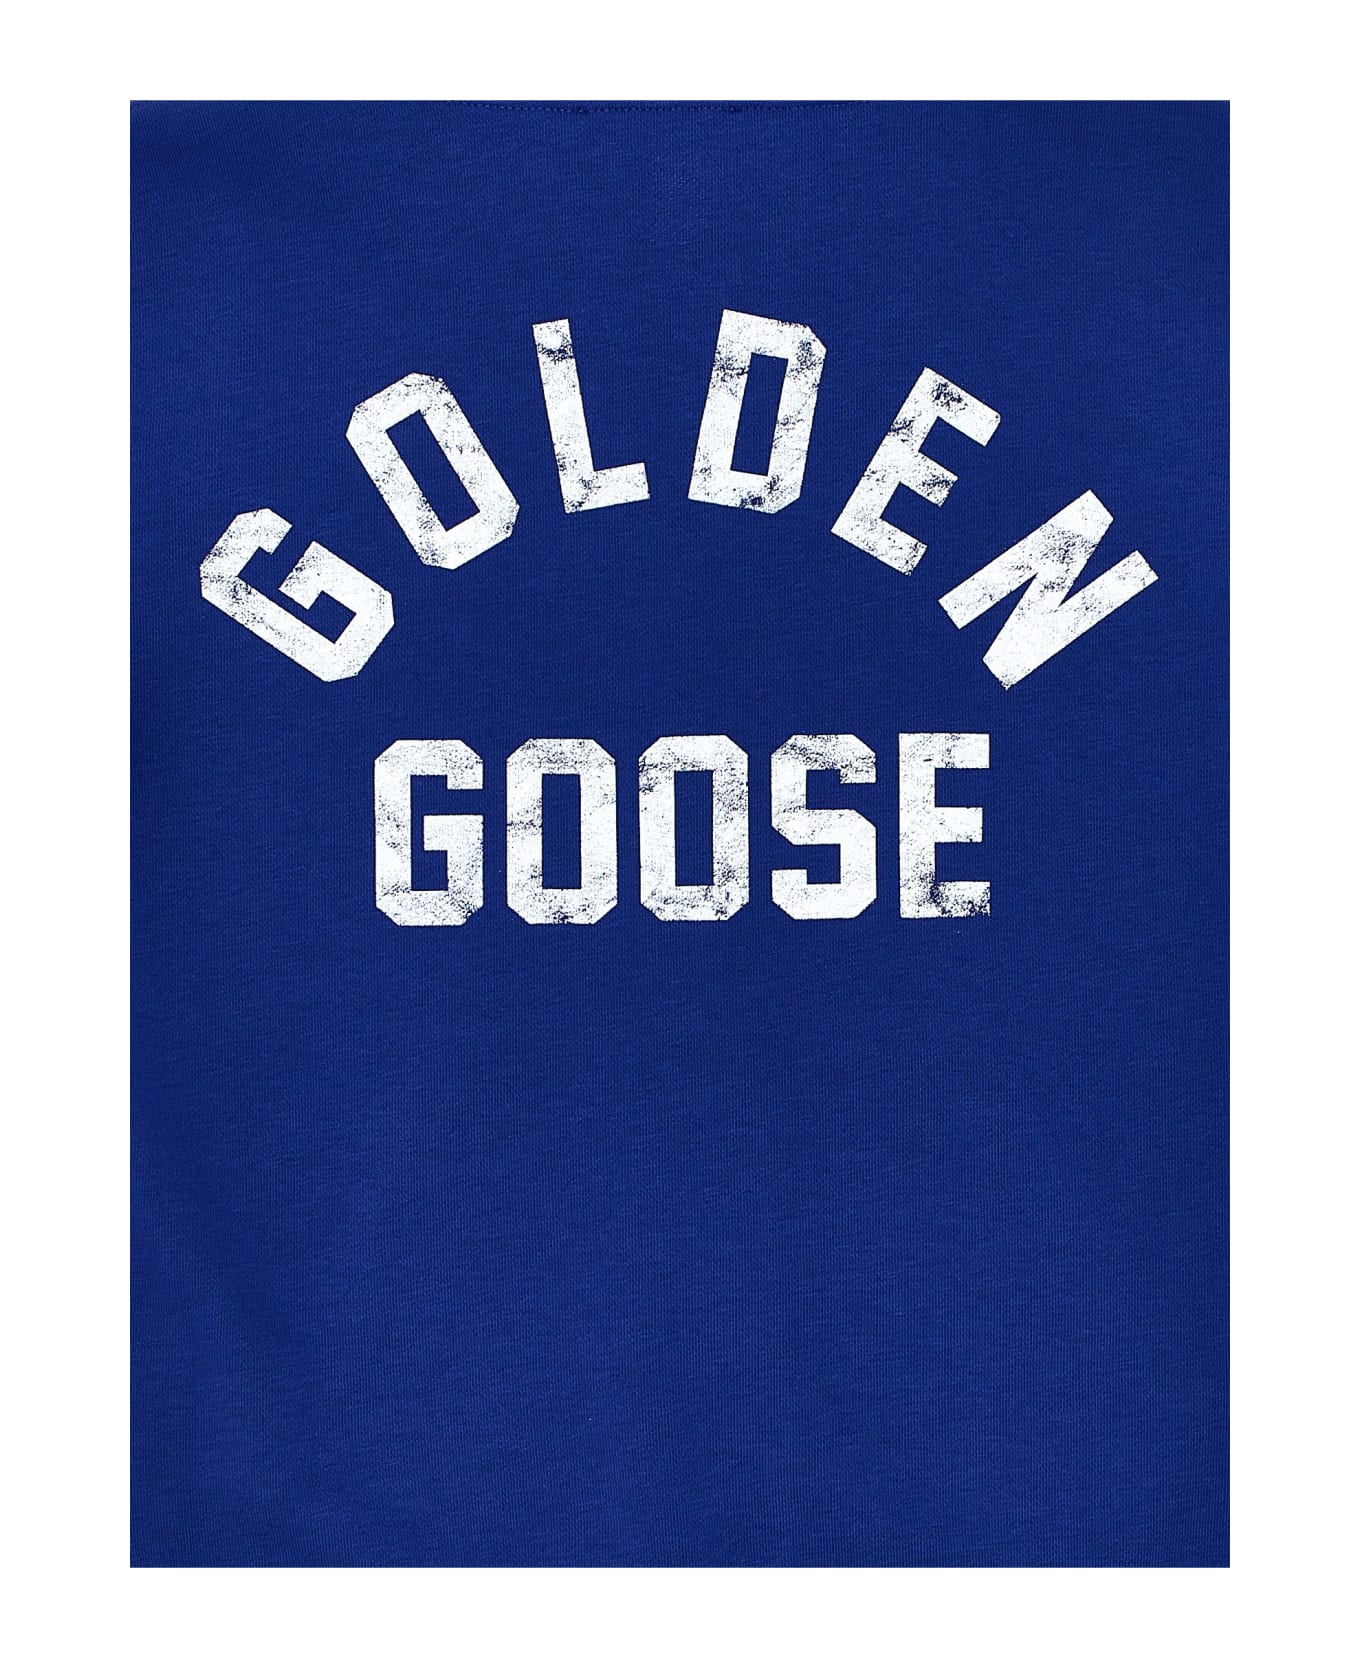 Golden Goose Logo Print Hoodie - Blue